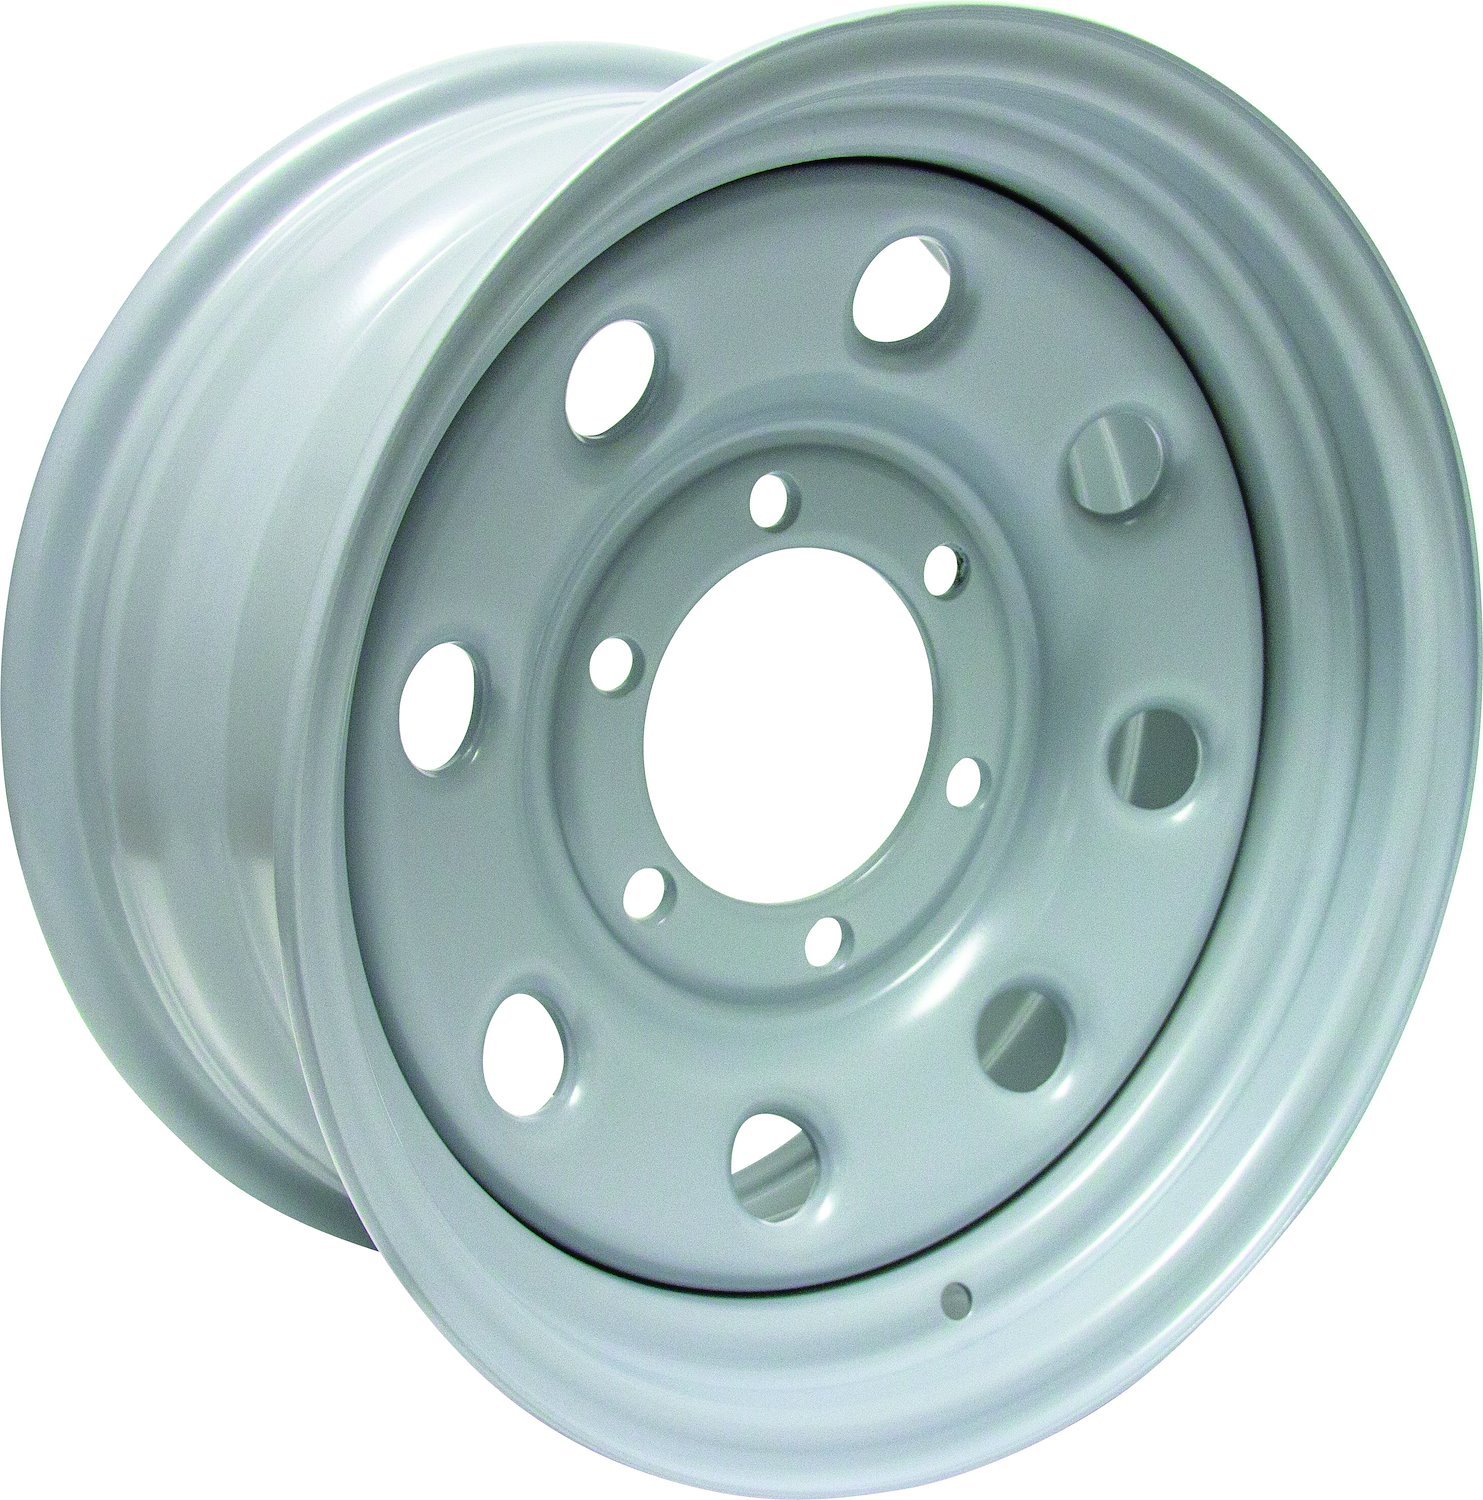 X99120N Steel Wheel [Size: 15" x 7"] Grey Finish